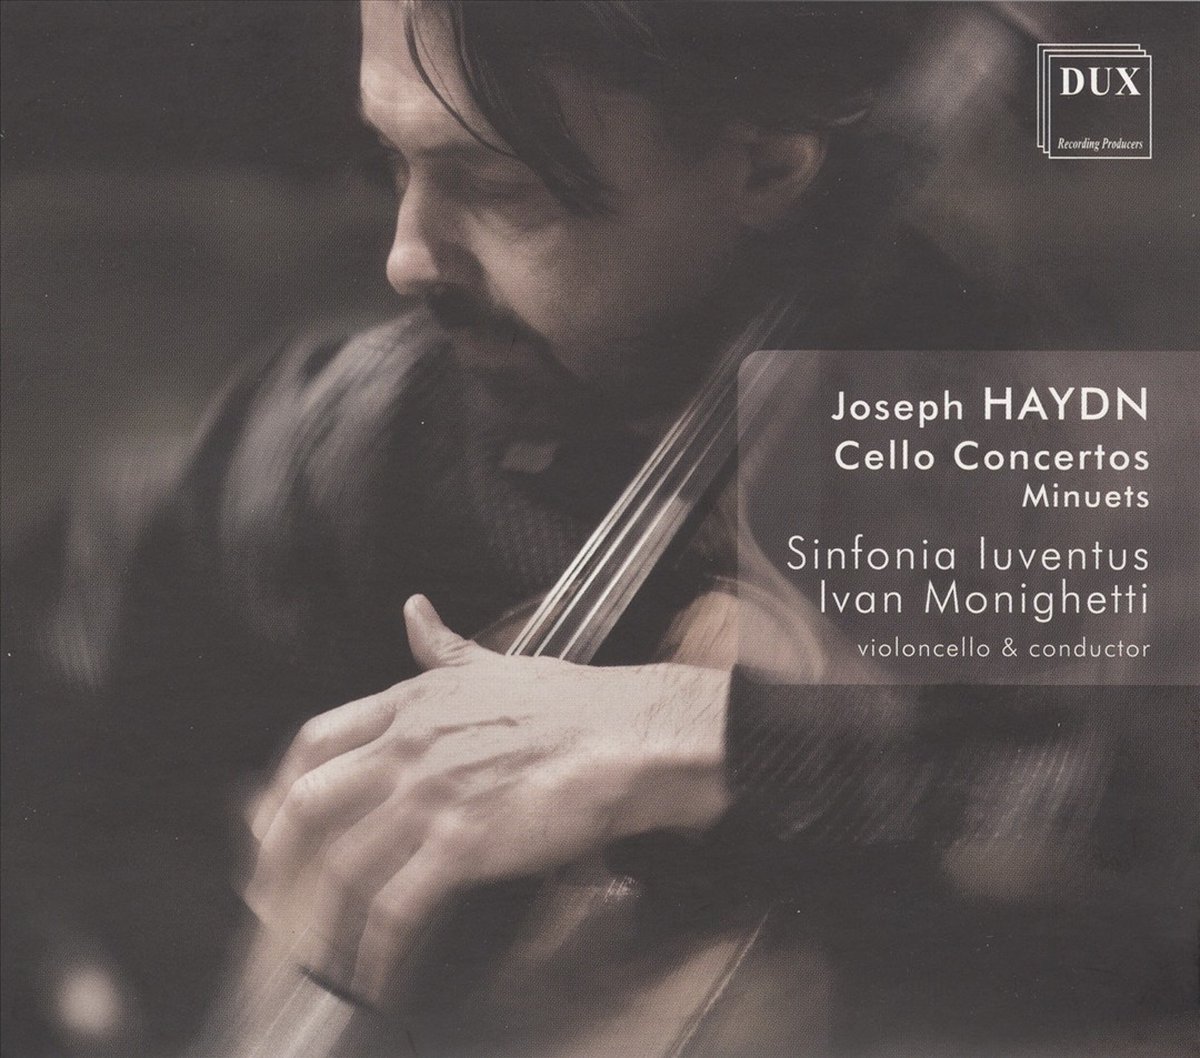 Haydn: Cello Concertos, Minuets - Sinfonia J Monighetti: Cello